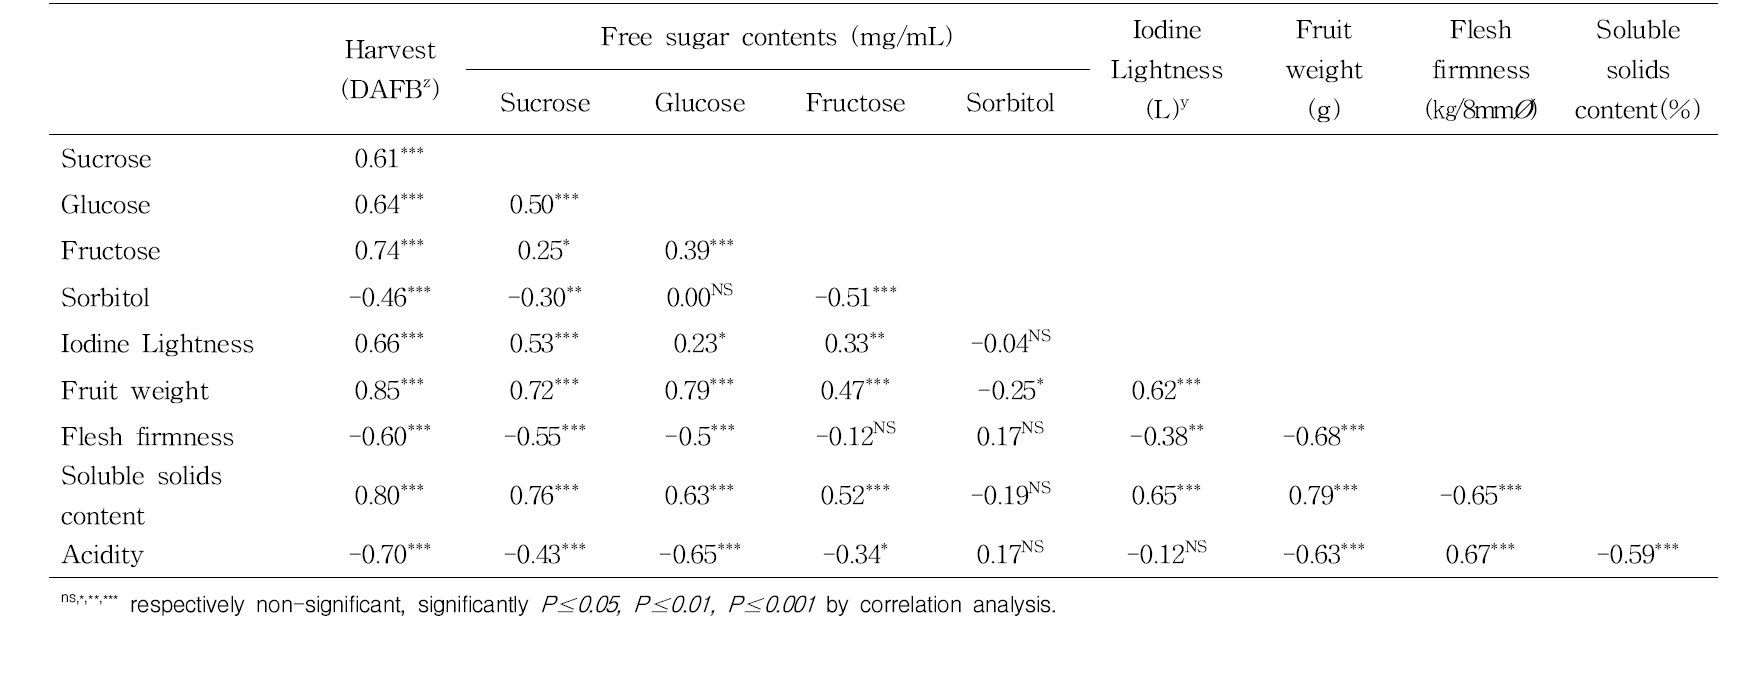 Pearson correlations coefficients among fruit characteristics